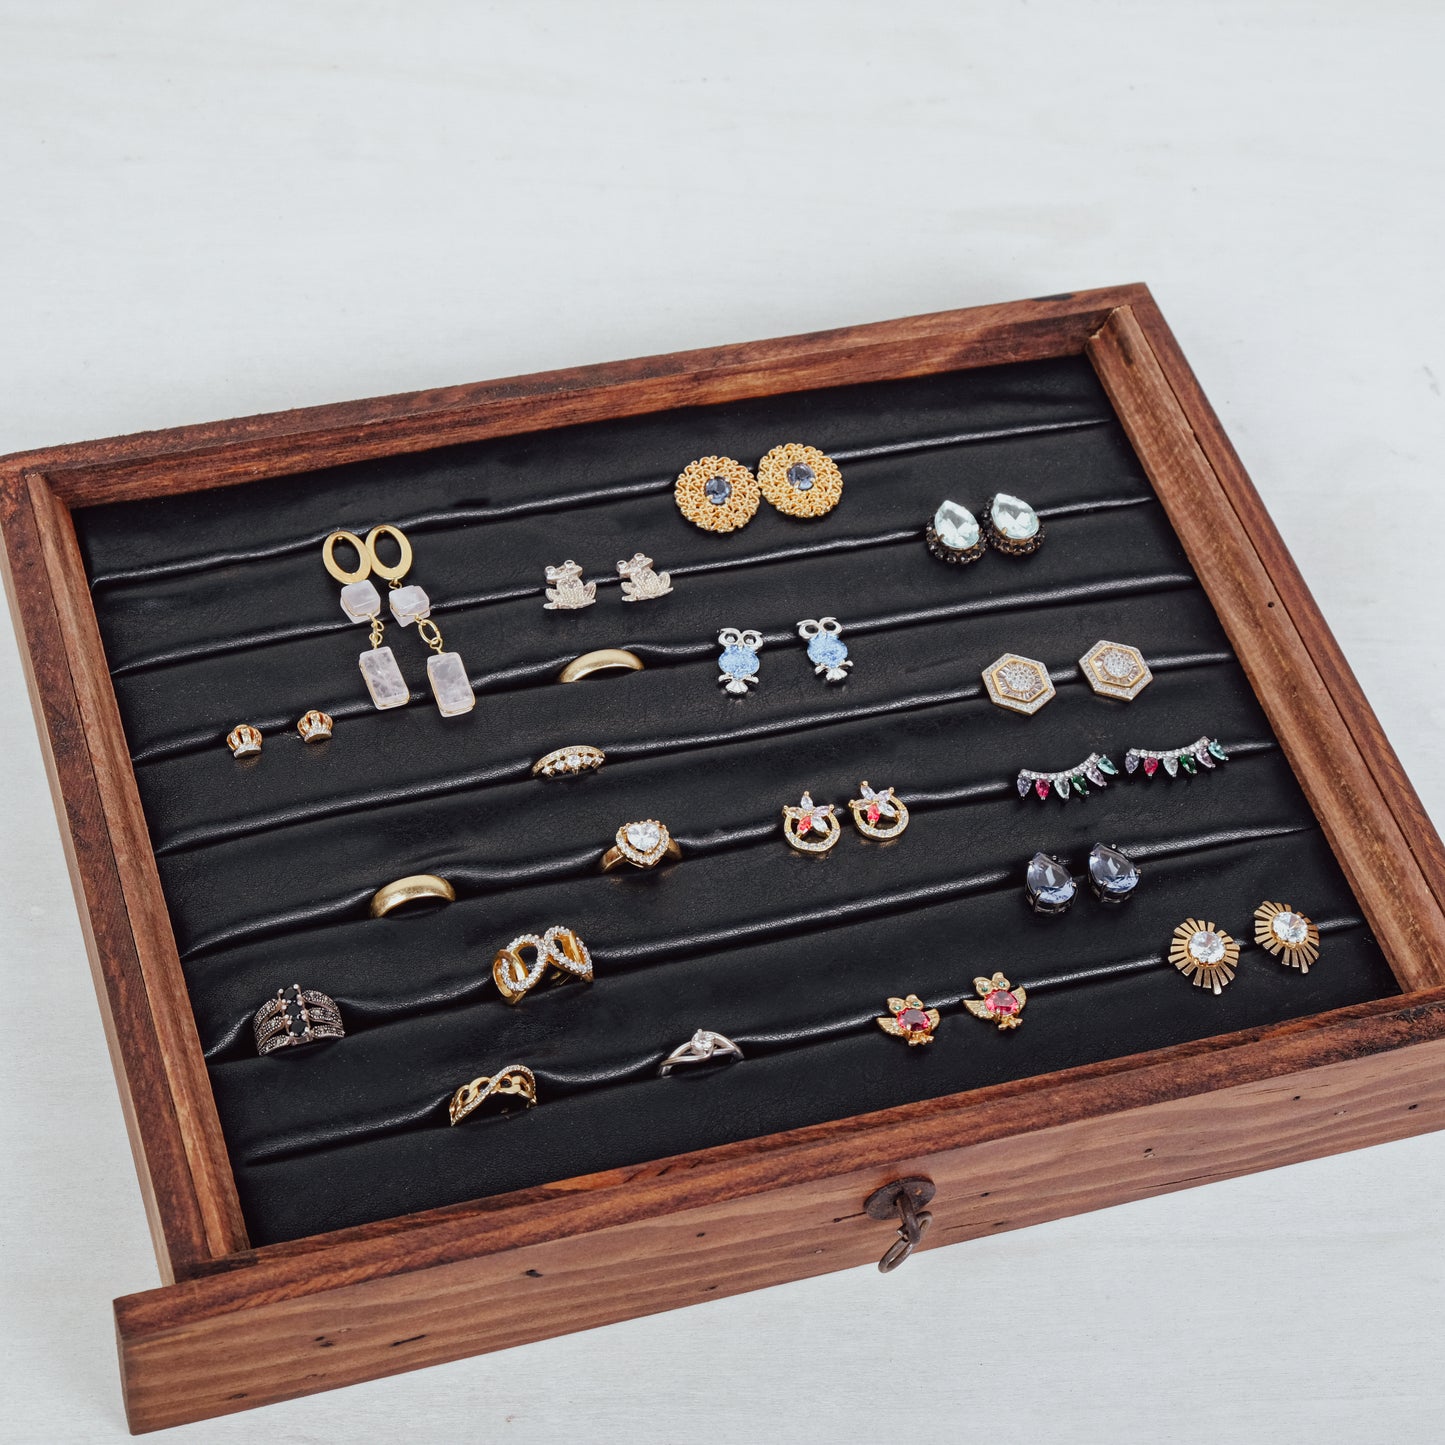 Women's Jewelry Box Organizer with Two Drawers  - Deferichs